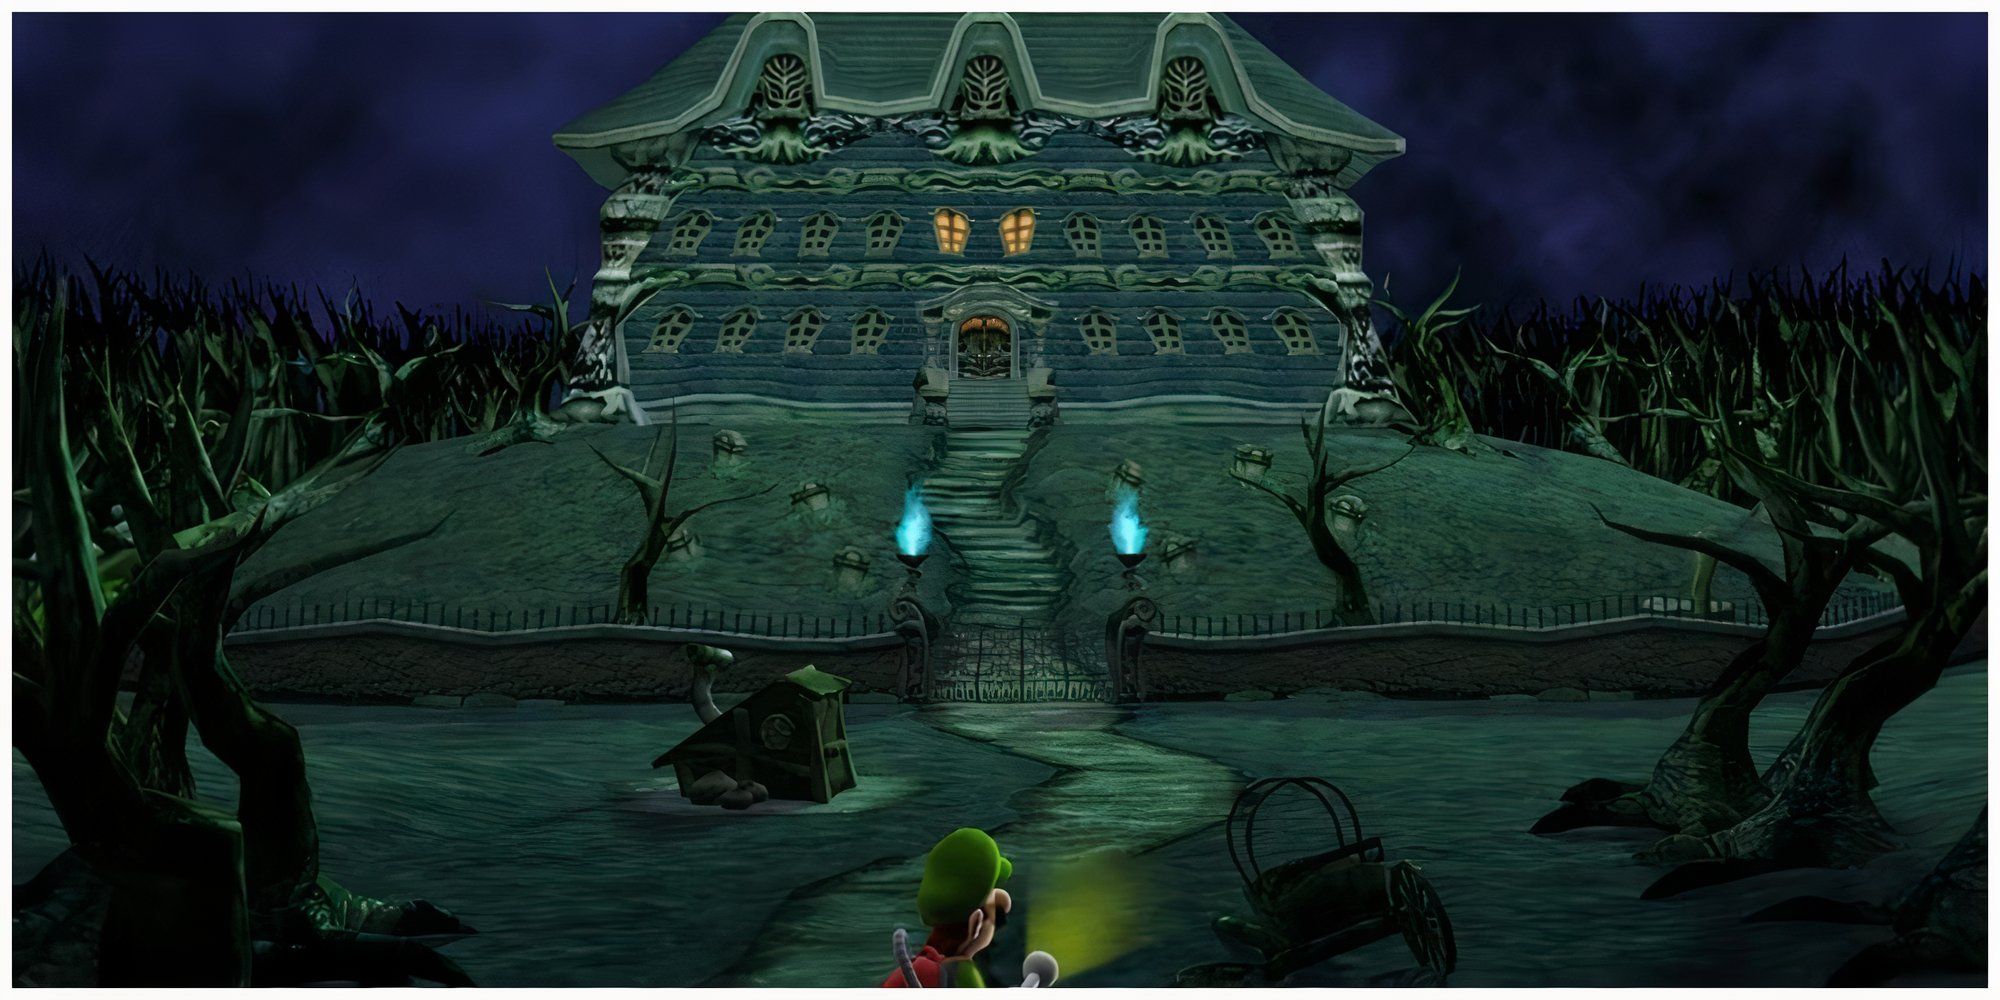 Luigi entering the mansion in the Gamecube game